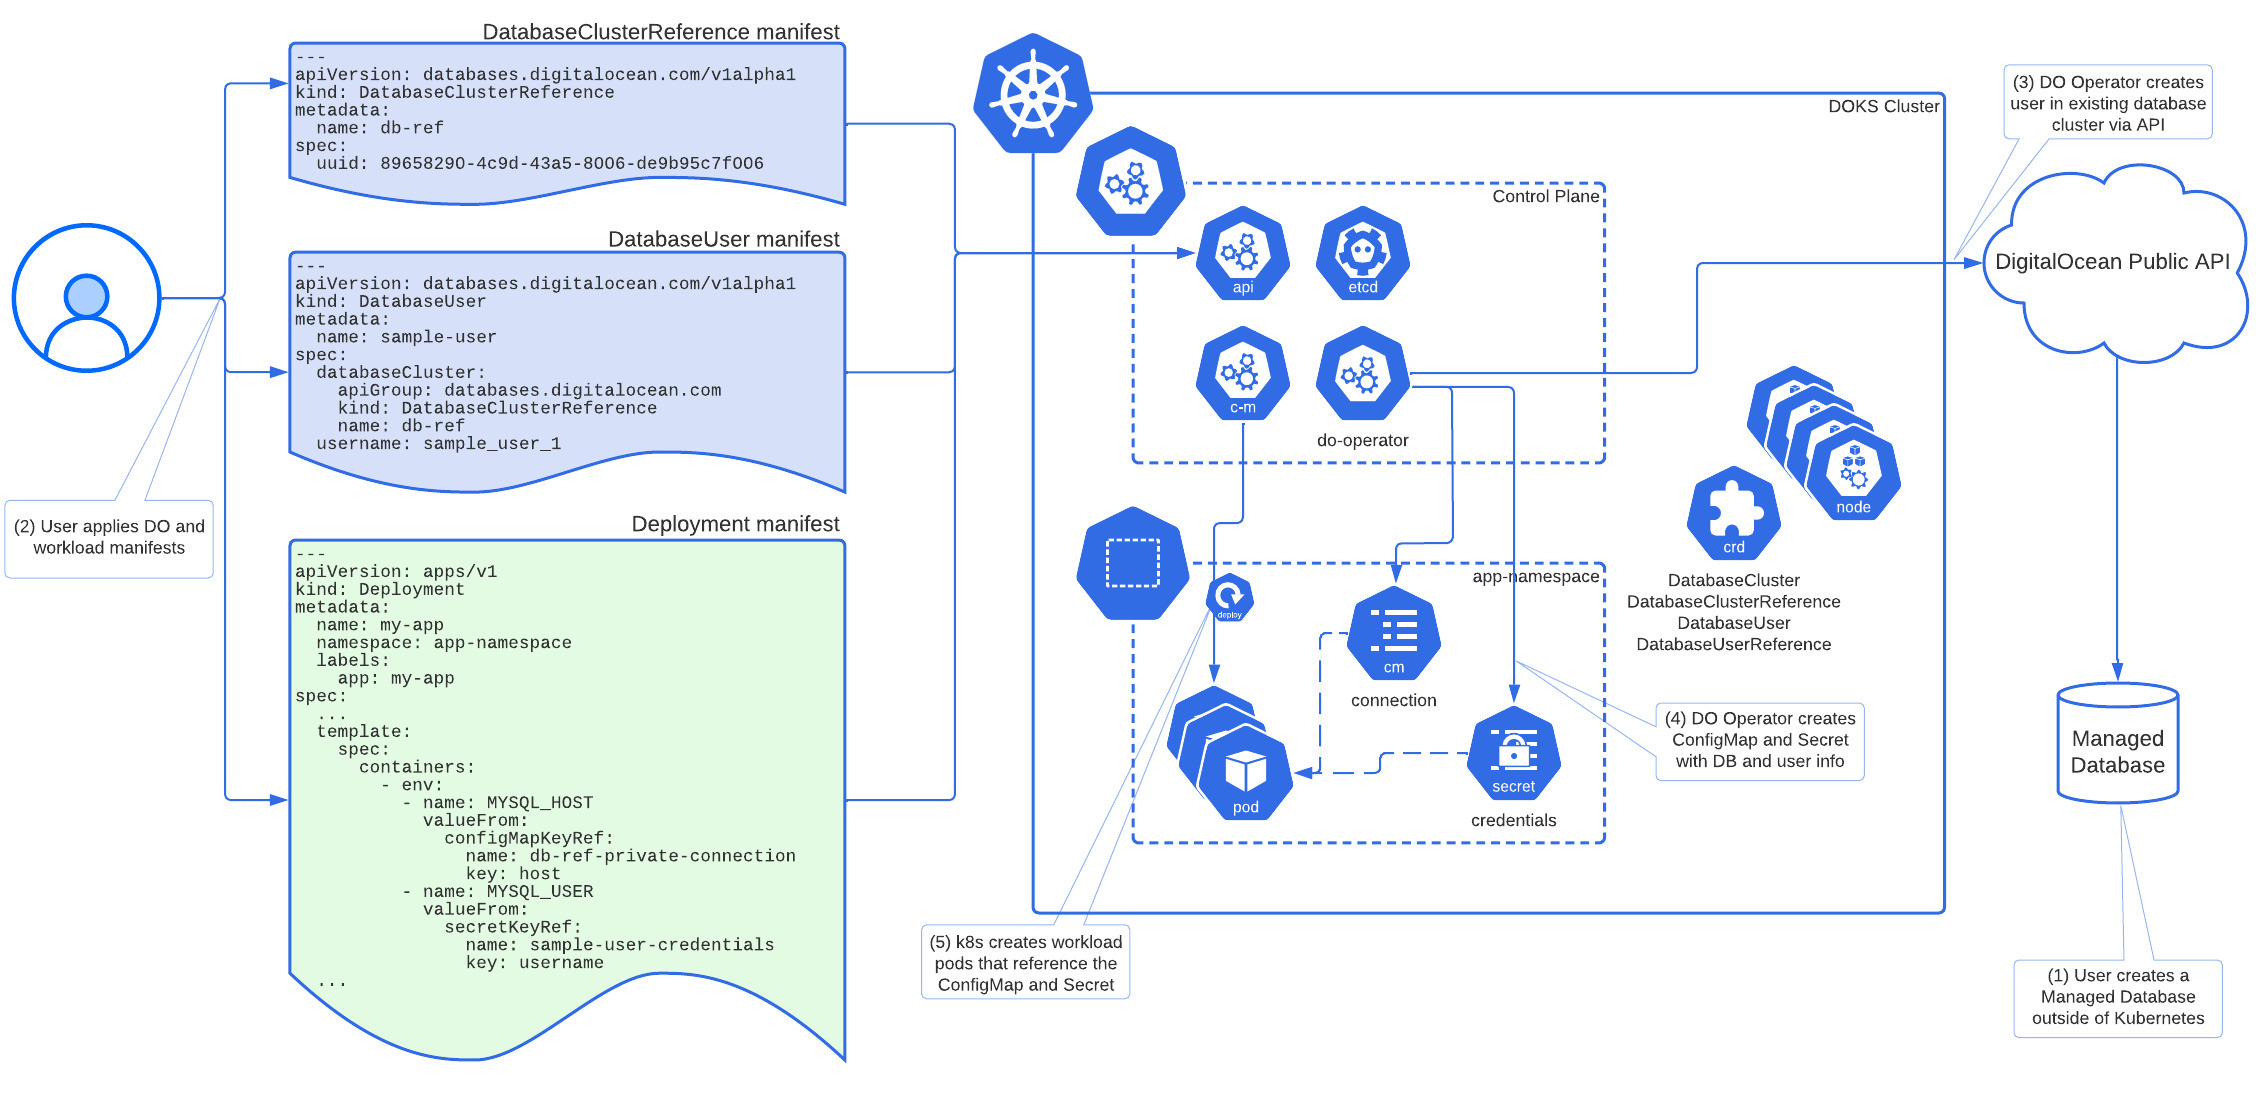 The Managed Database Architecture diagram